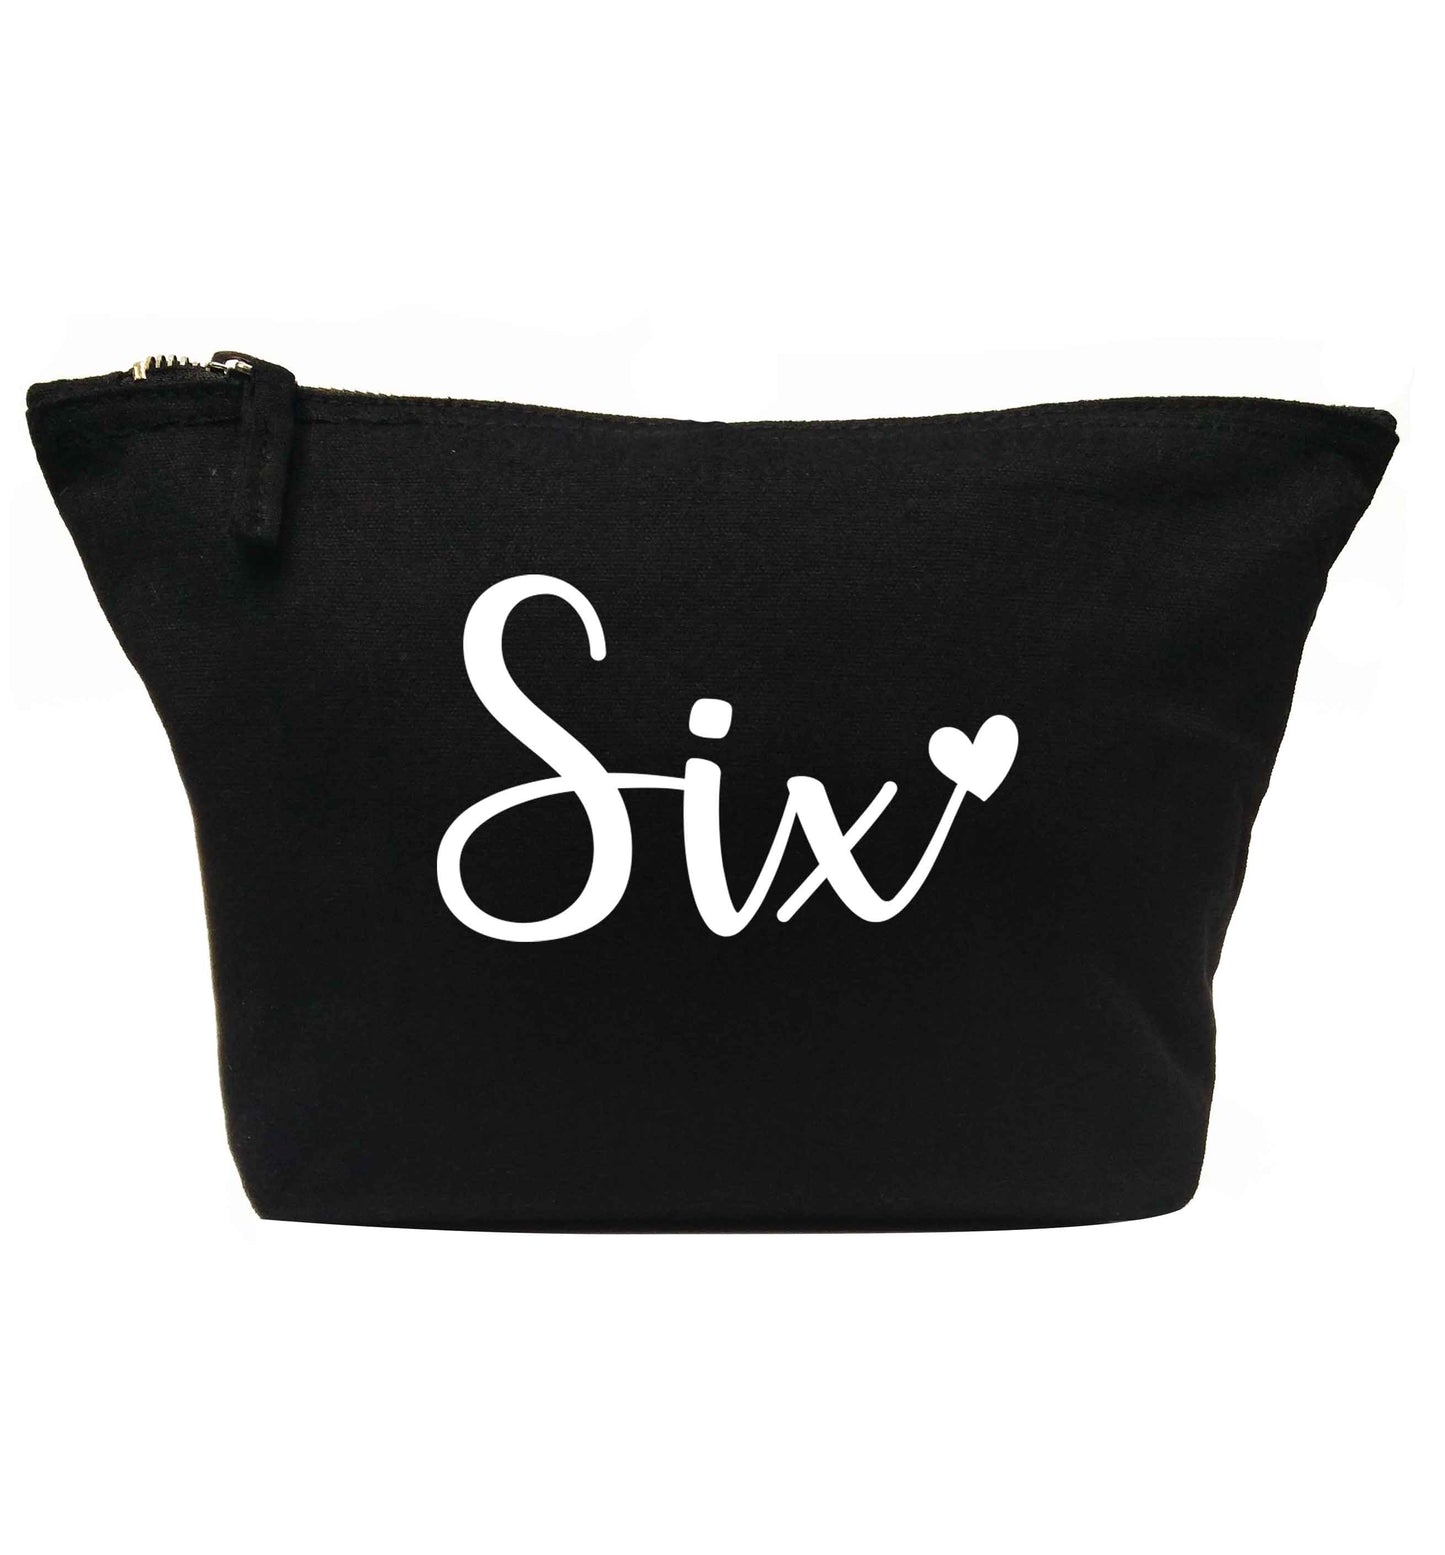 Six and heart! | Makeup / wash bag